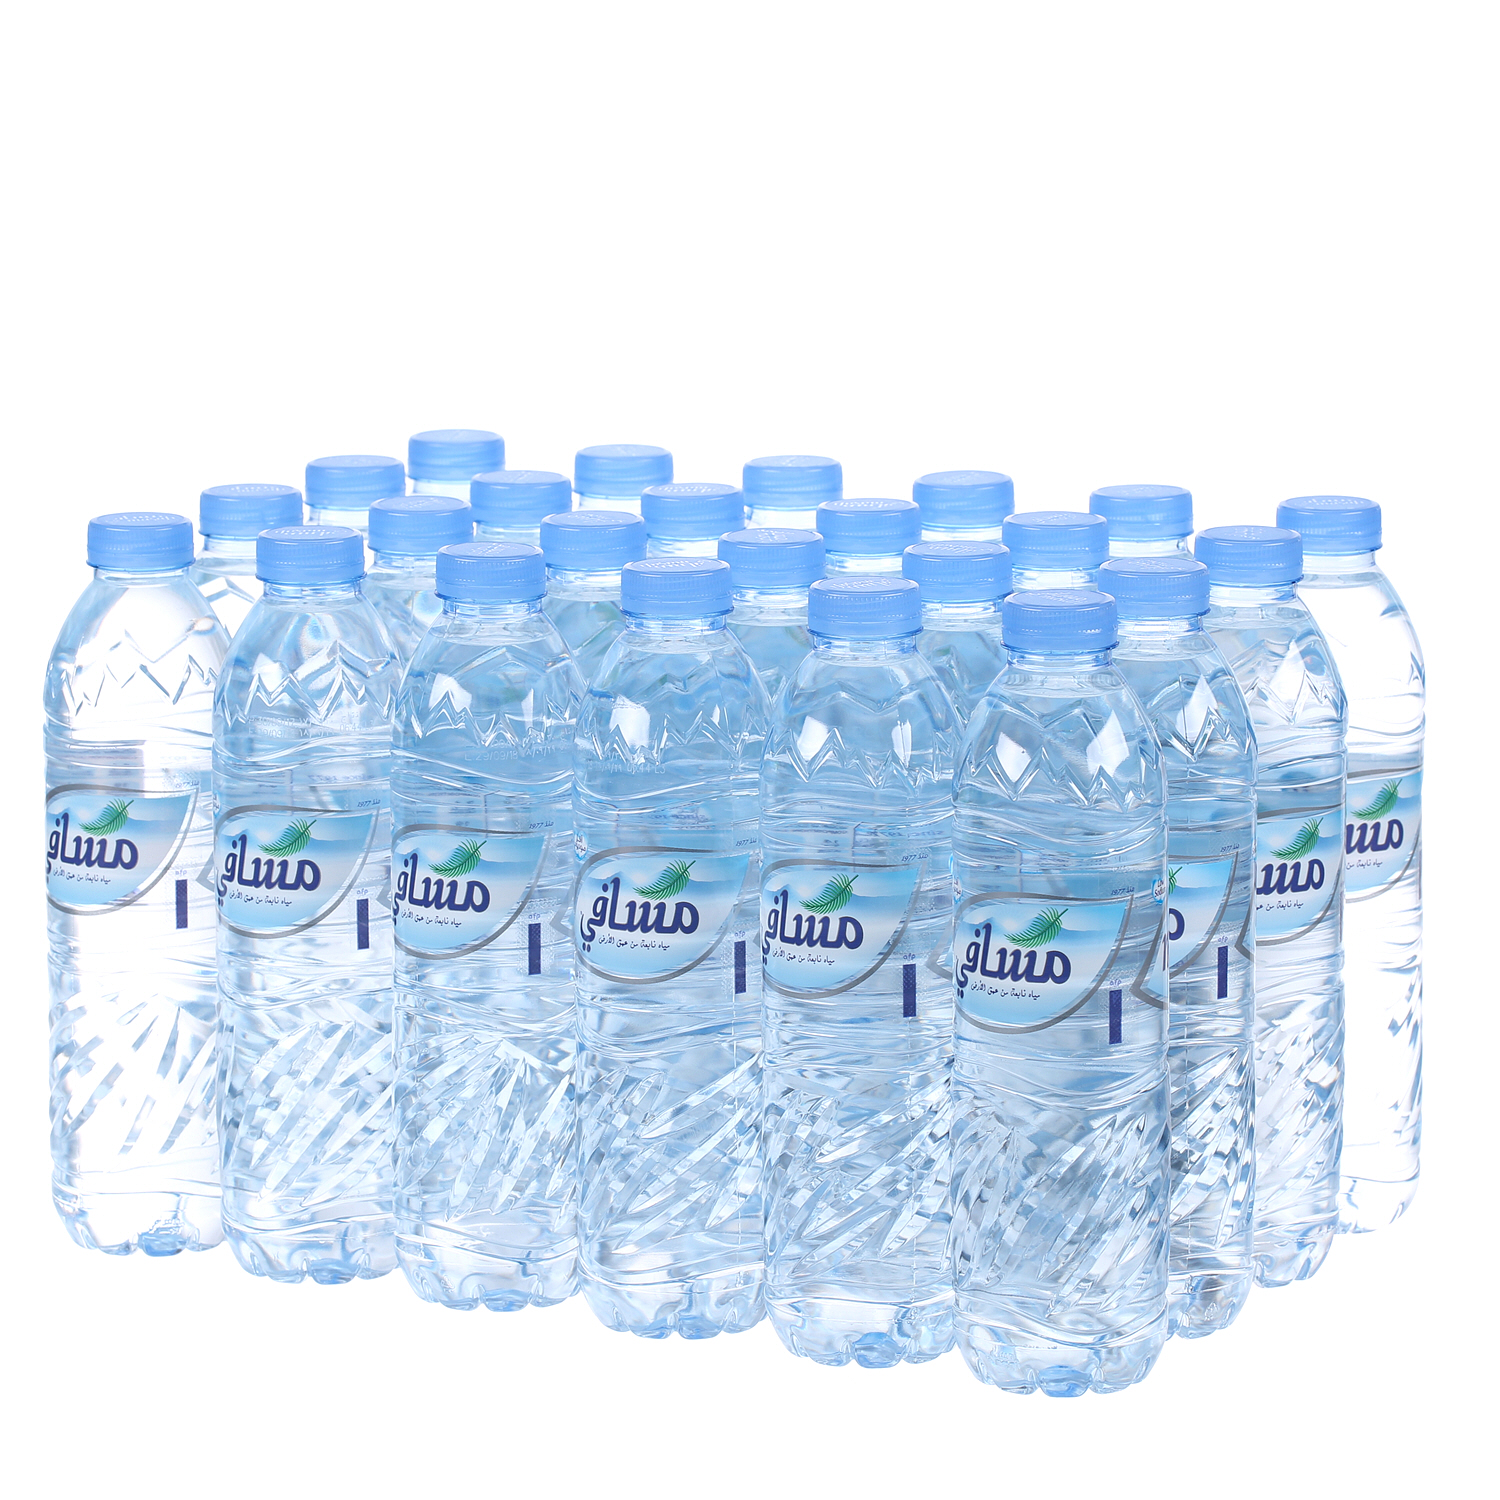 Masafi Mineral Water 0.5 L × 24 Pack